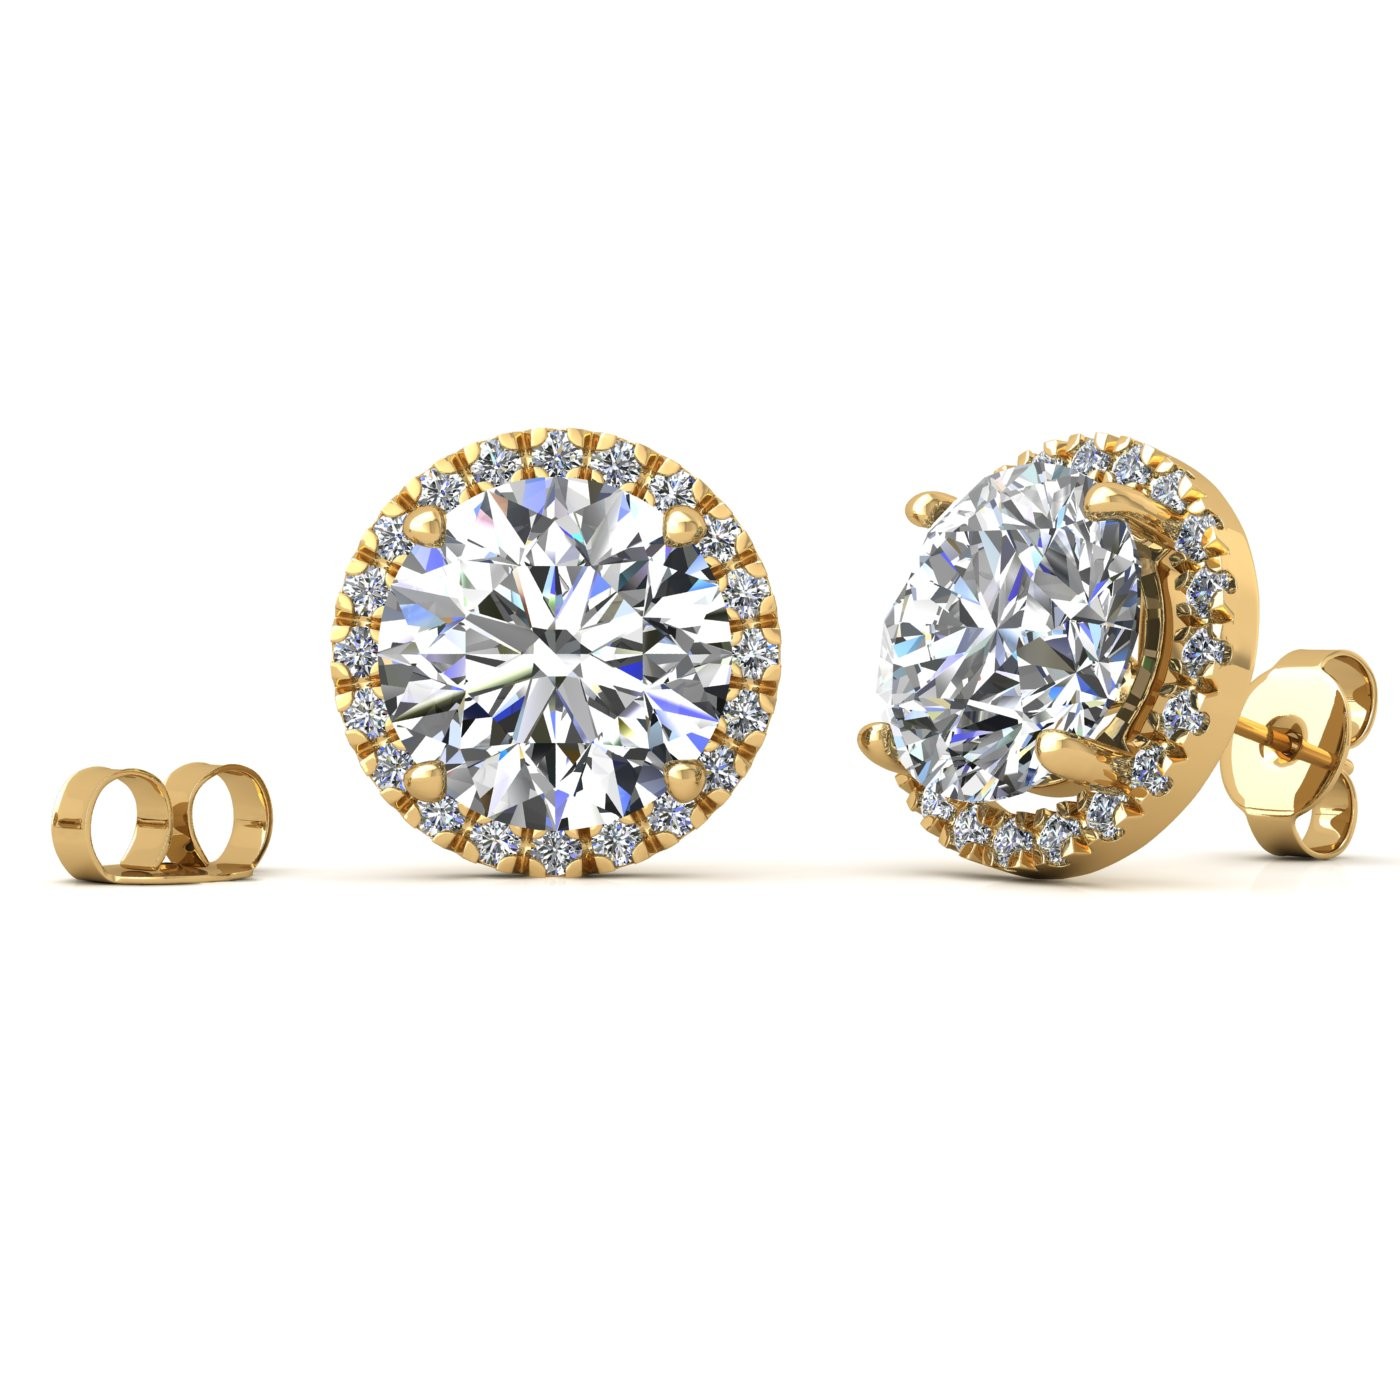 18k yellow gold 2 ct each (4,0 tcw) 4 prongs round shape diamond earrings with diamond pavÉ set halo Photos & images